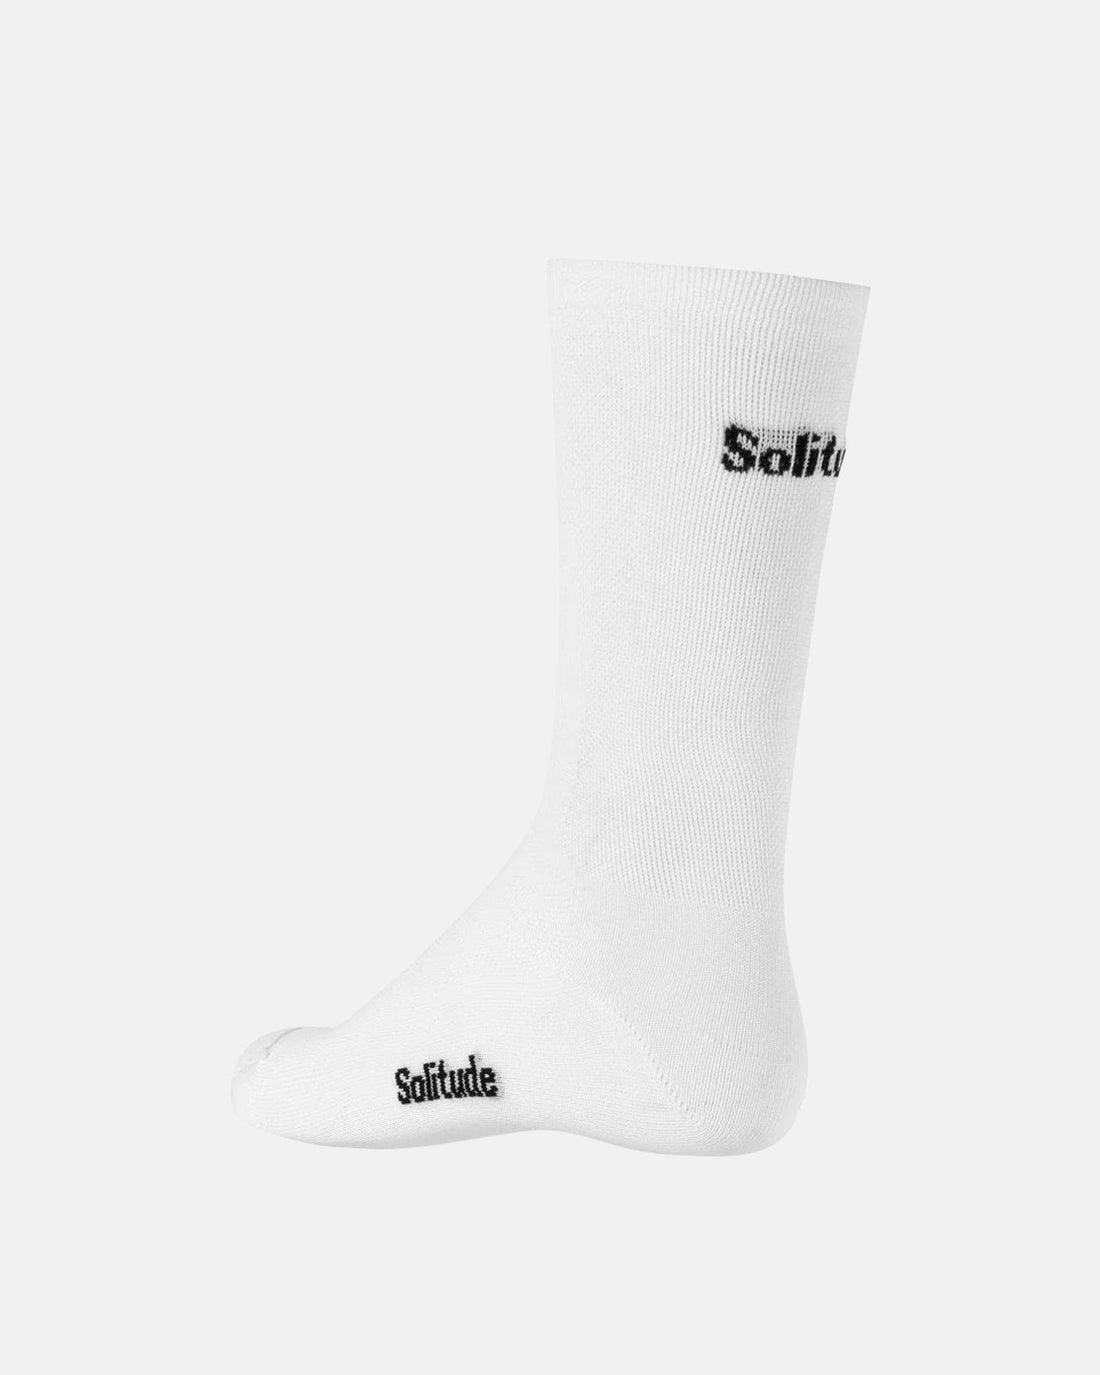 Solitude Socks - White - Pas Normal Studios